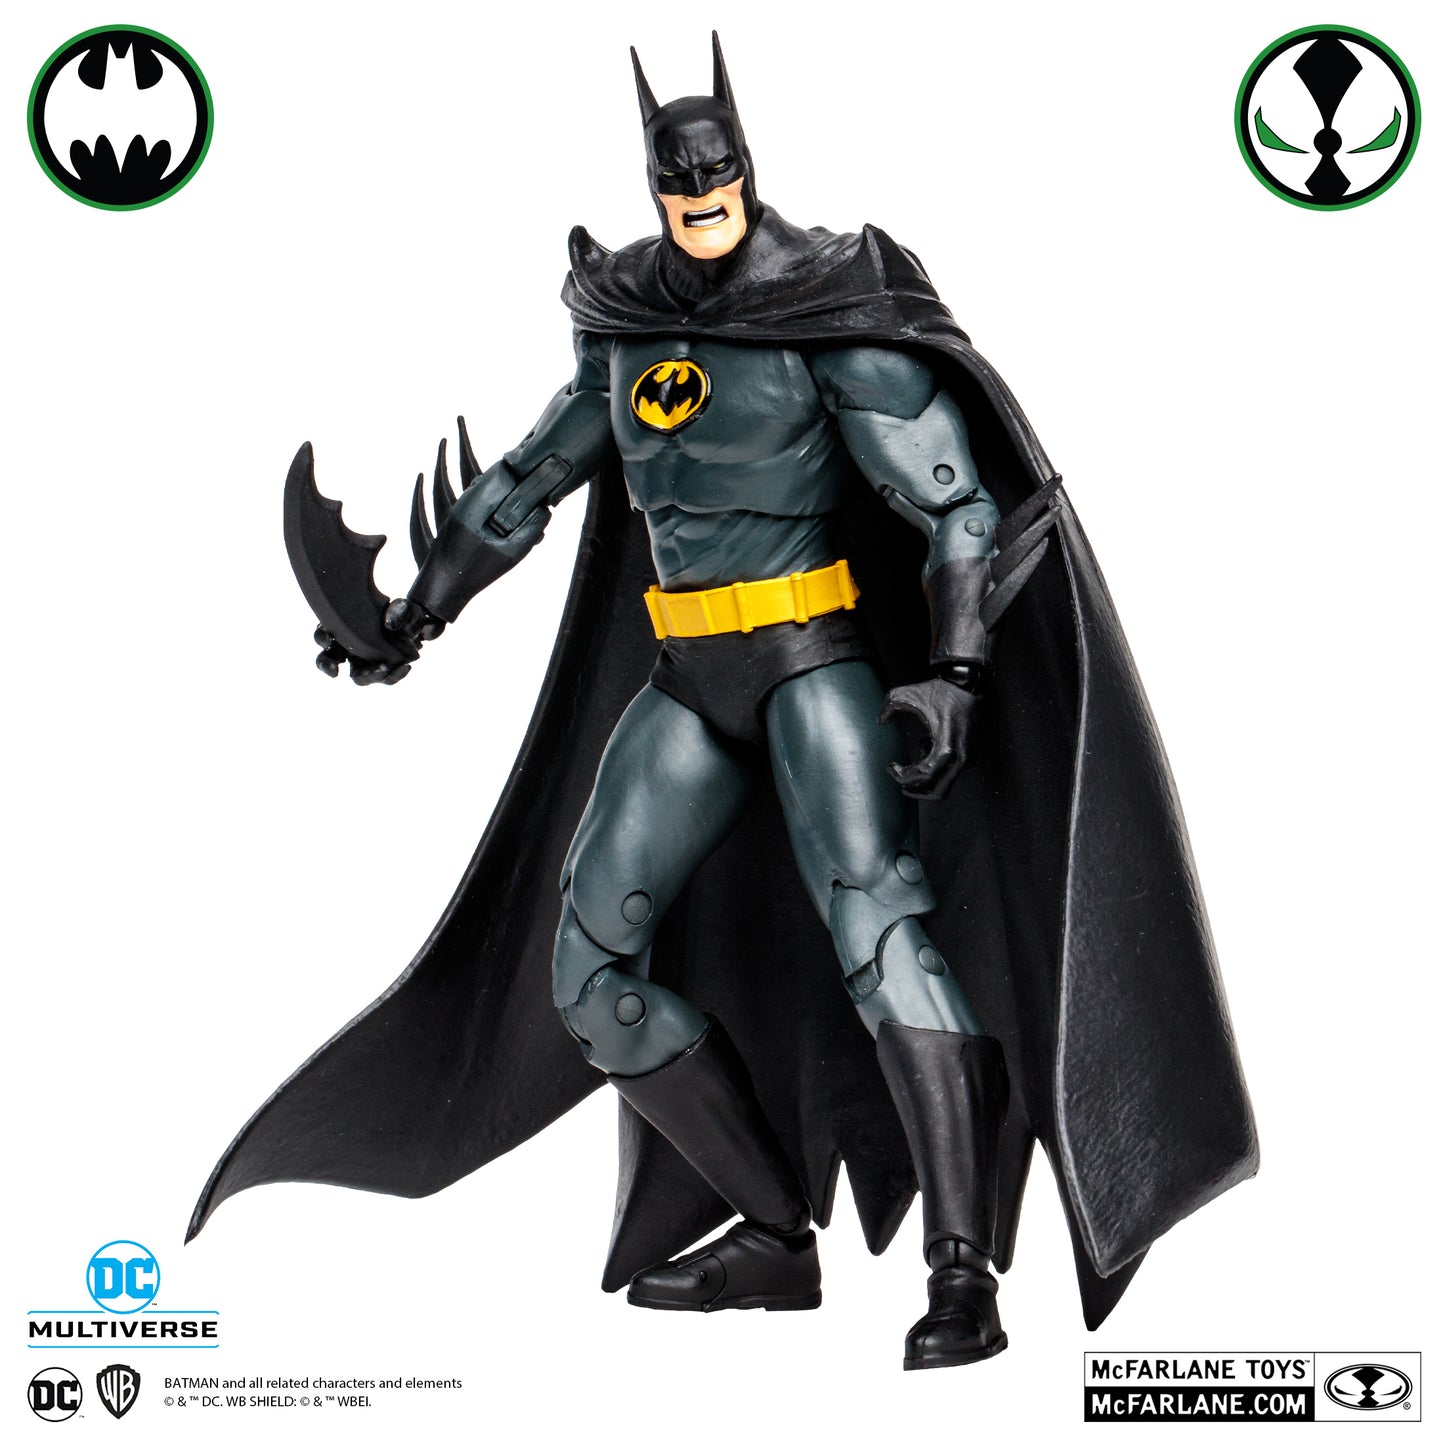 Batman Action figure 2-pack - Heretoserveyou